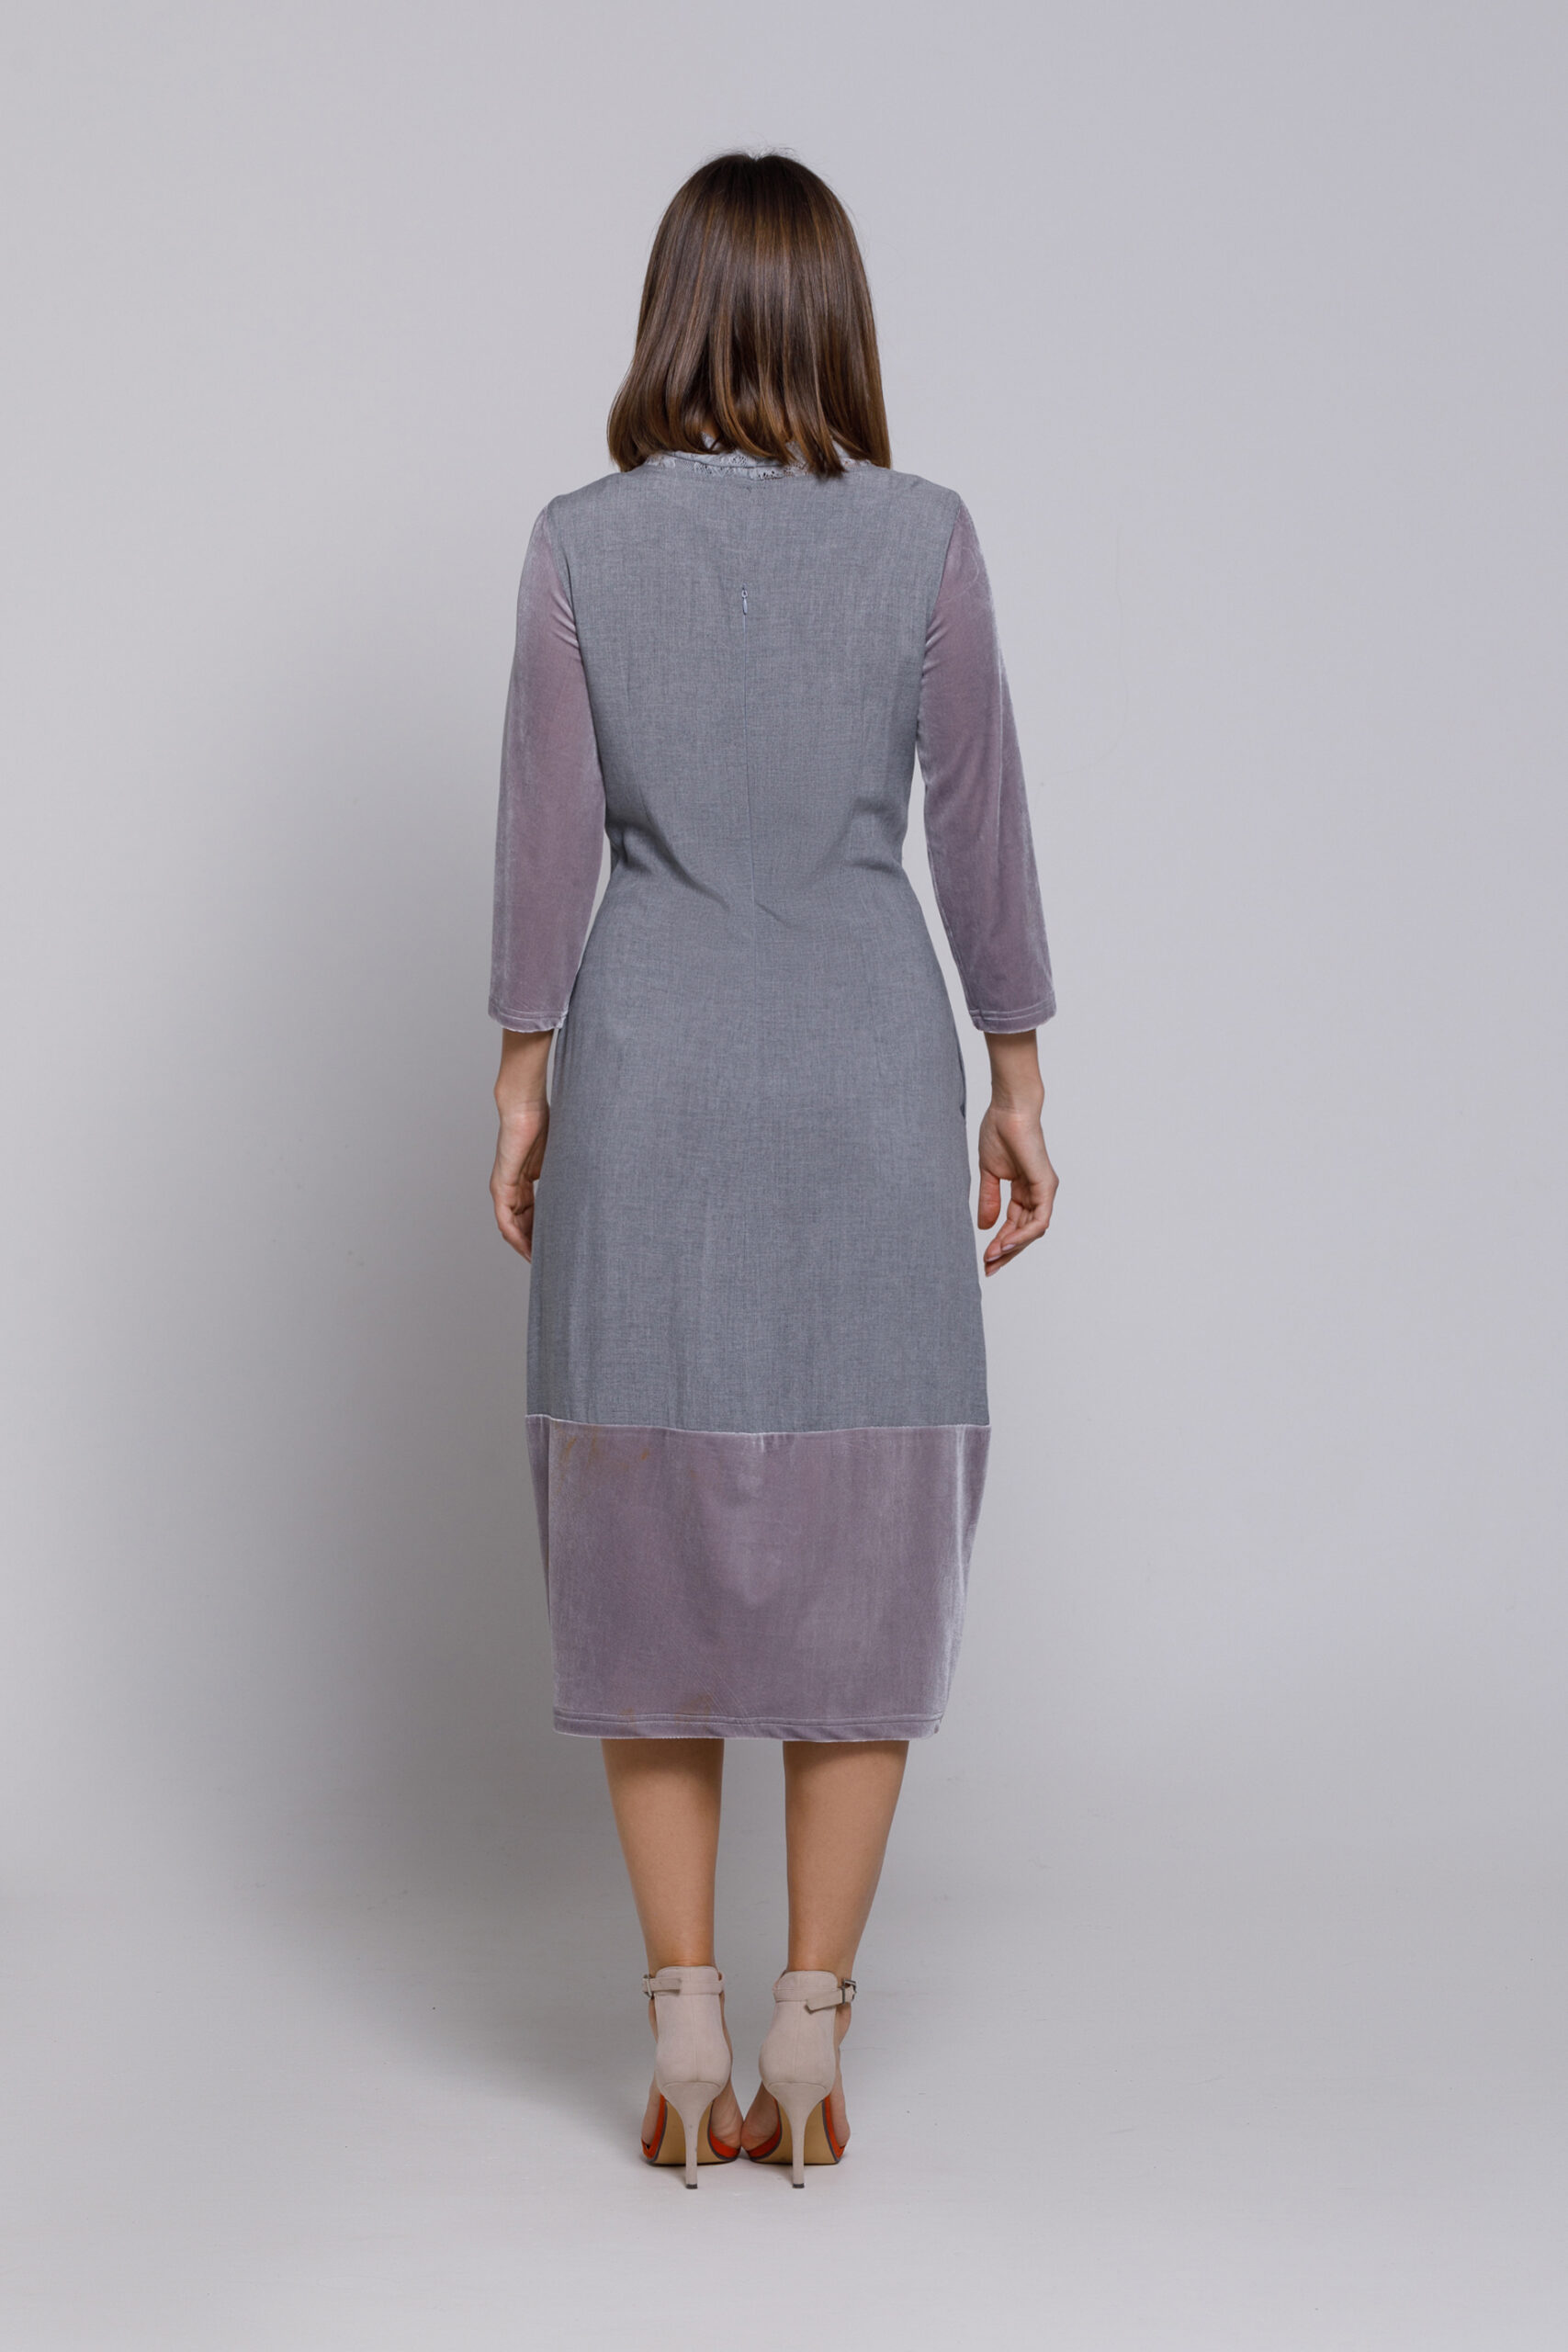 RAELYN dress in gray velvet and poplin. Natural fabrics, original design, handmade embroidery